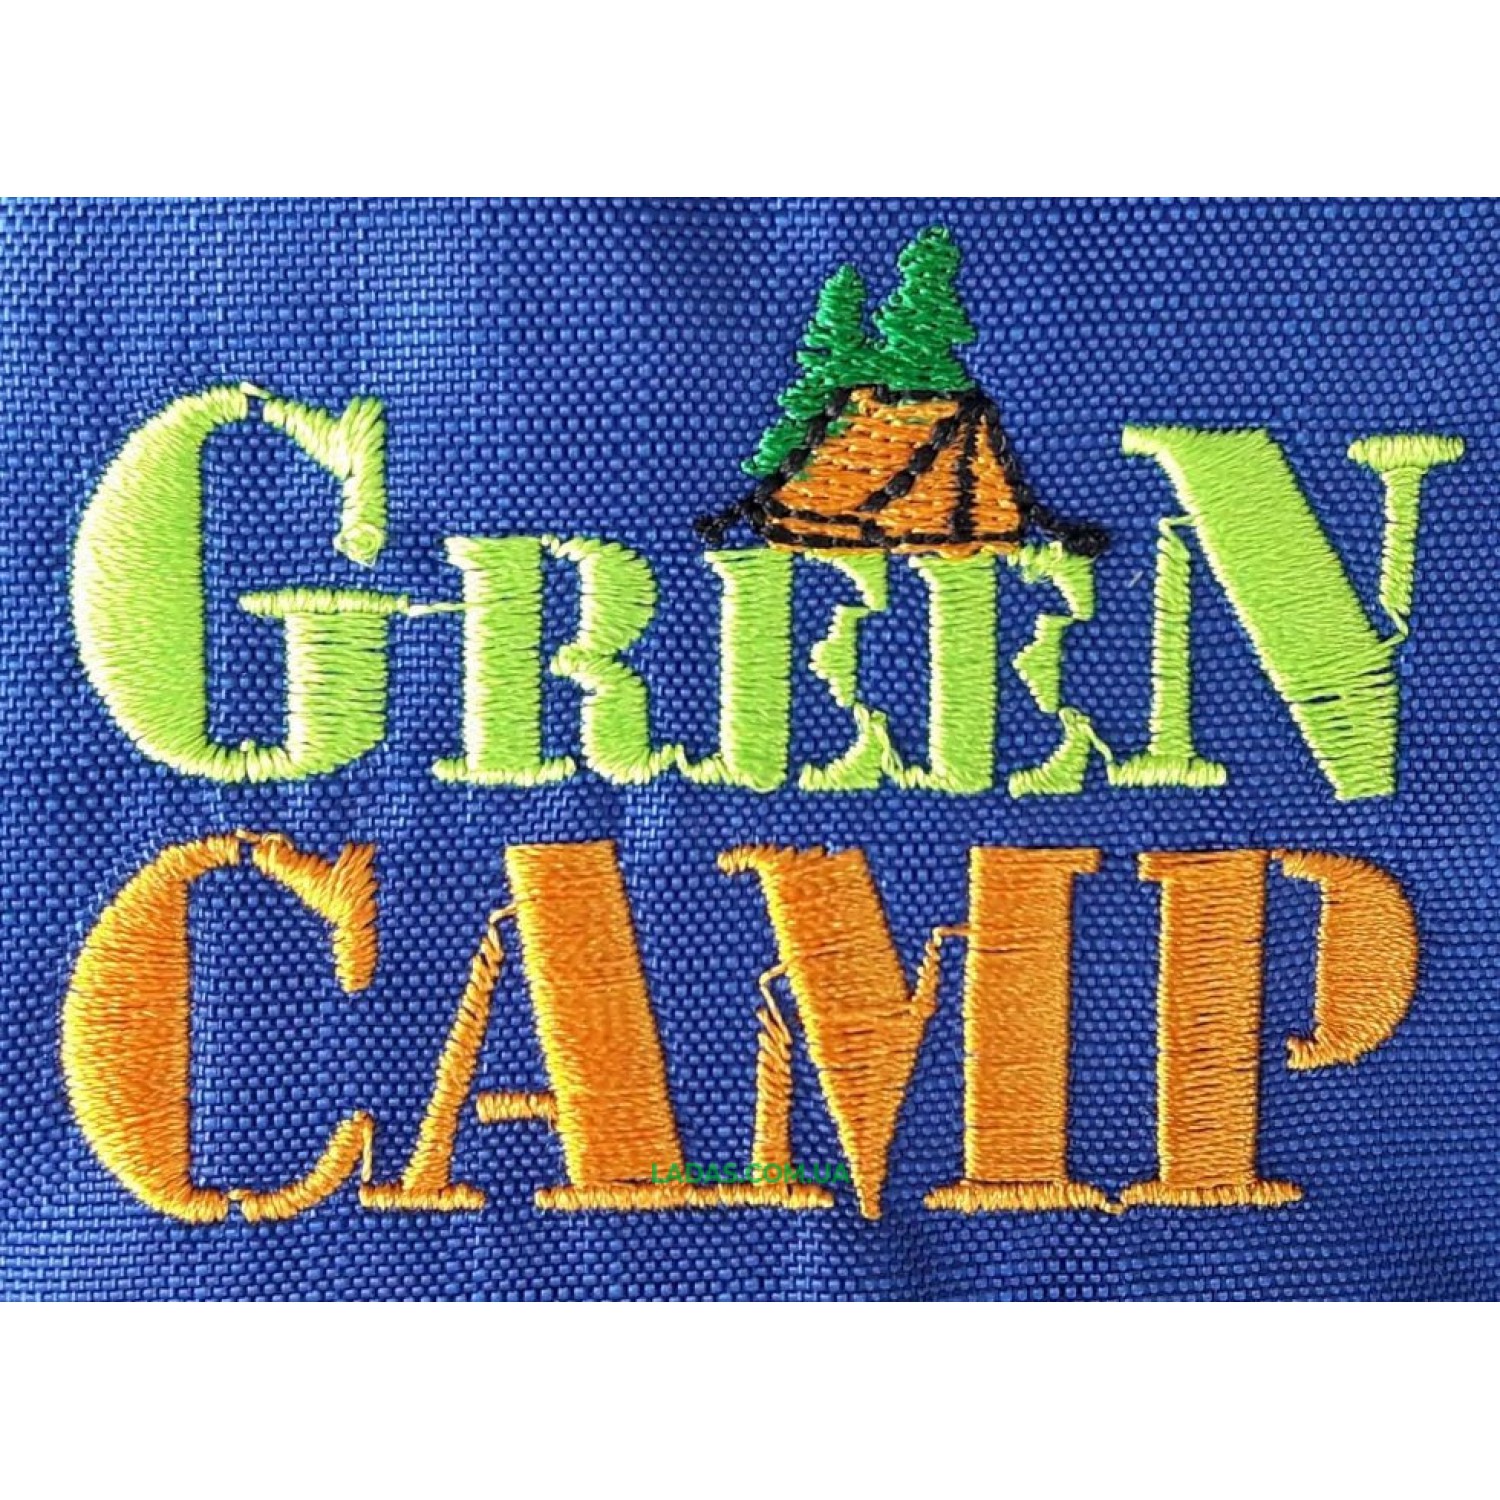 Палатка четырехместная Green Camp GC1009